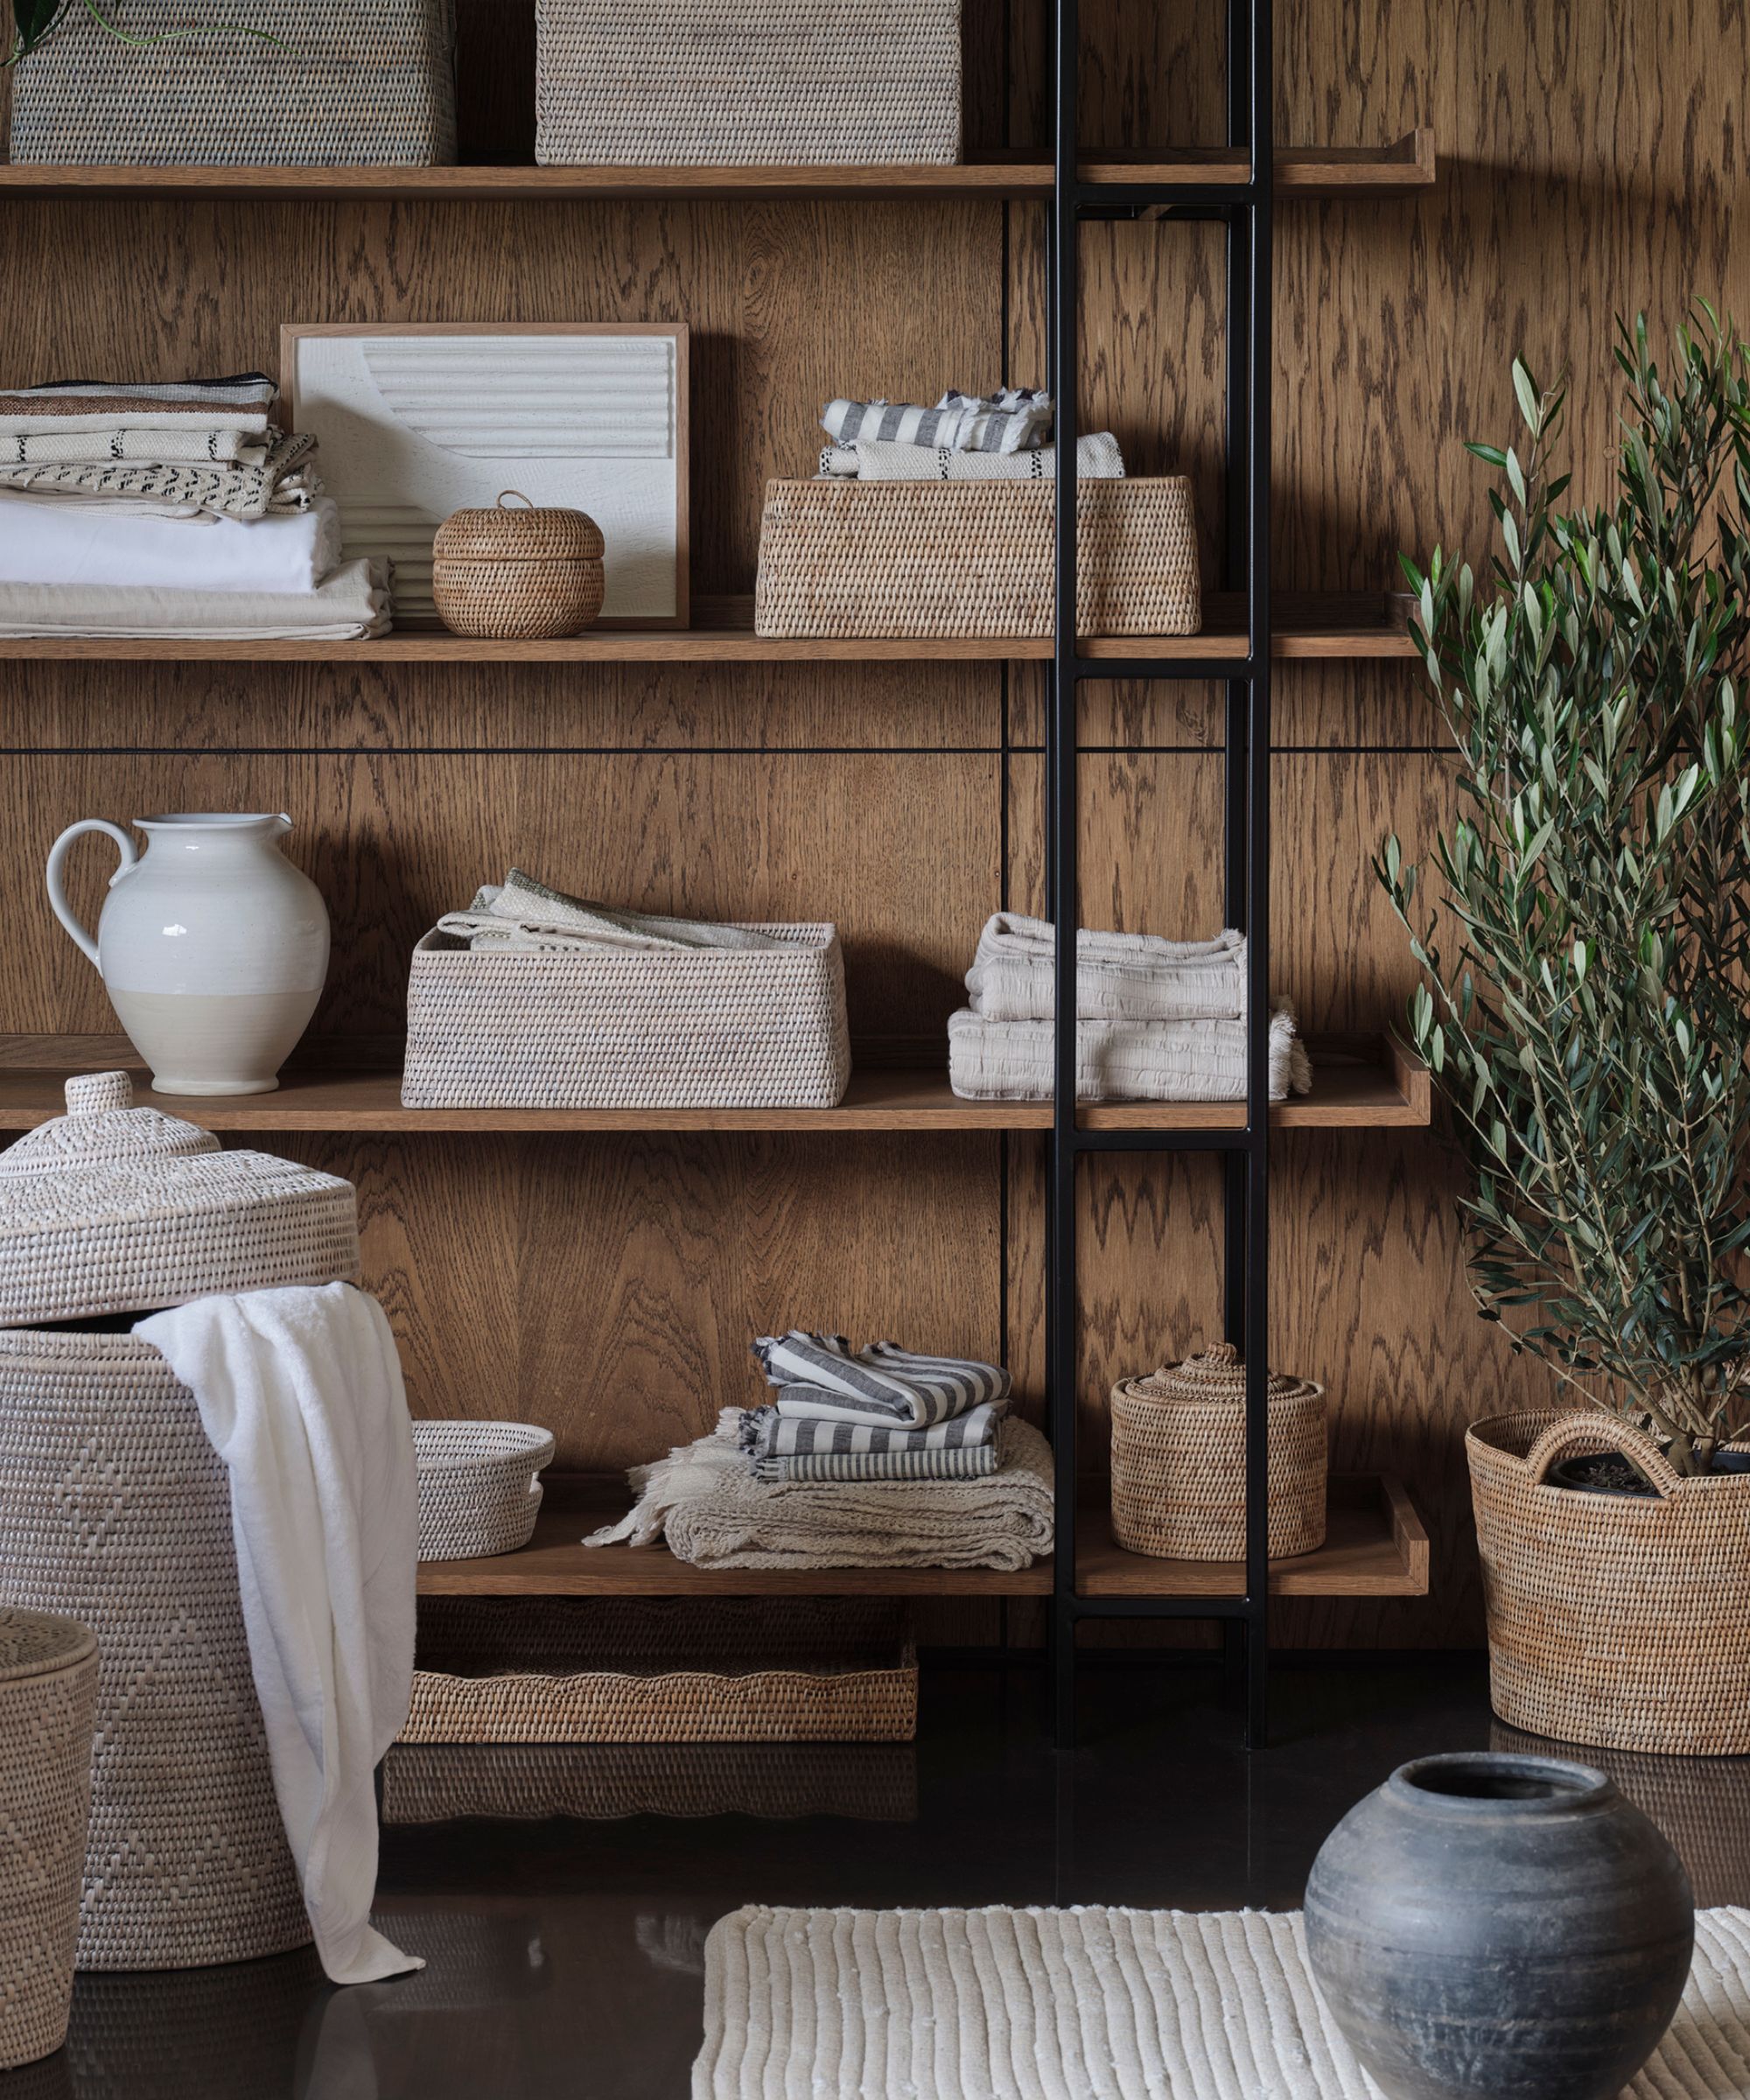 Wooden wall, wooden shelves, storage baskets, vase